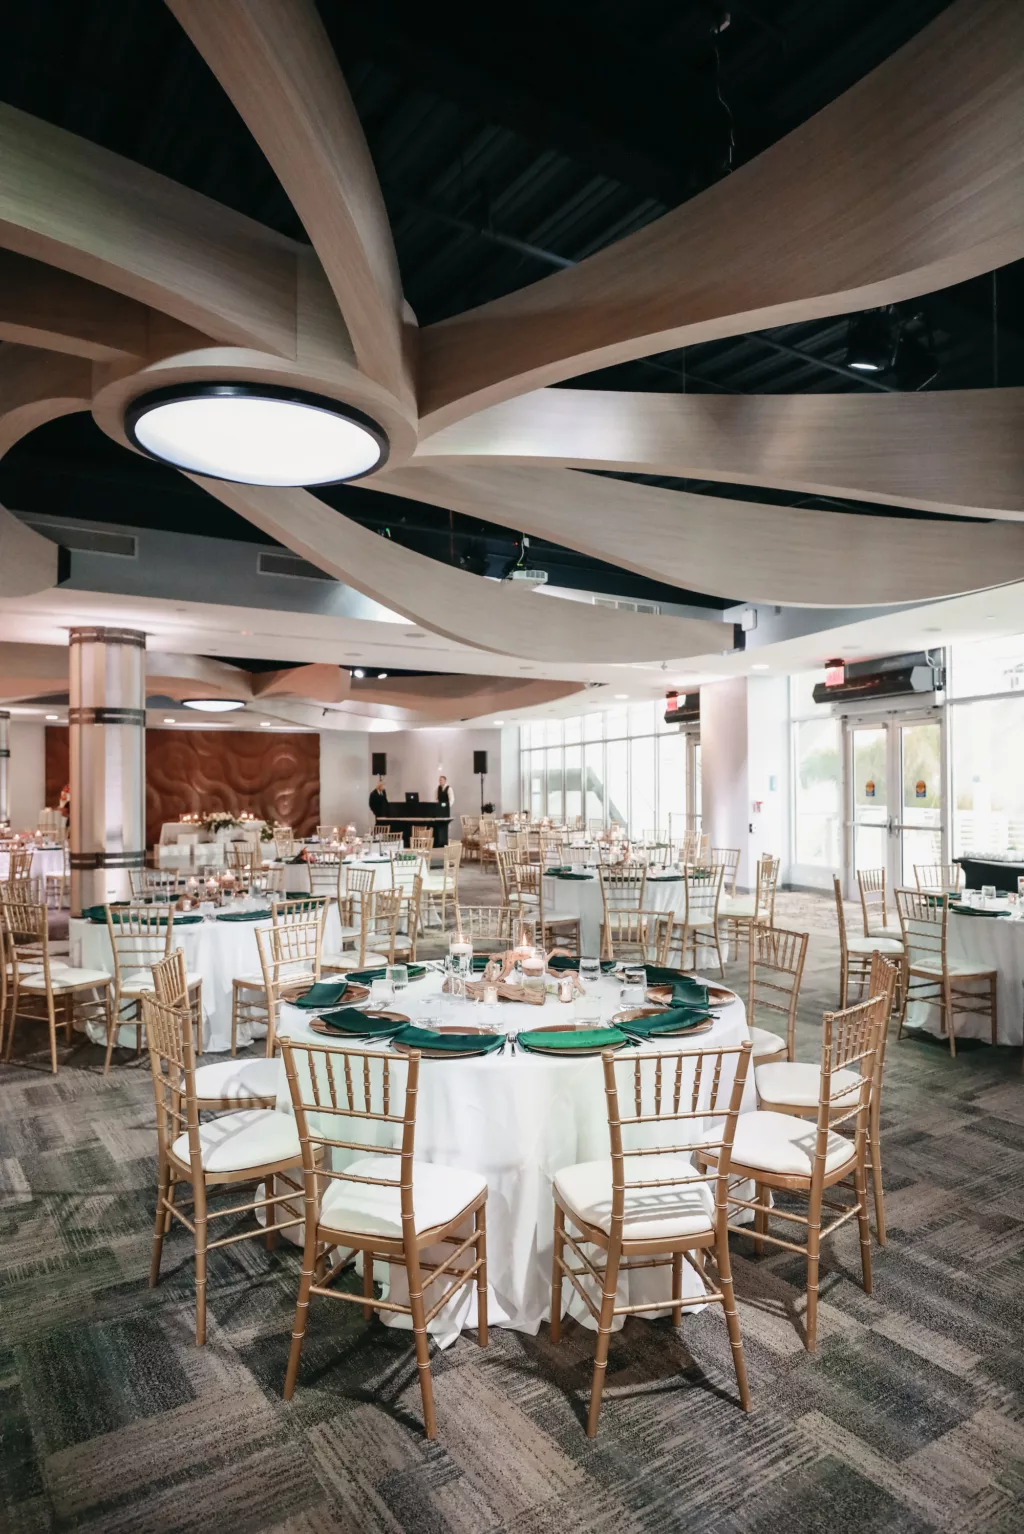 Tropical Indoor Wedding Reception in the Vinik Channelside Room | Tampa Bay Event Venue The Florida Aquarium